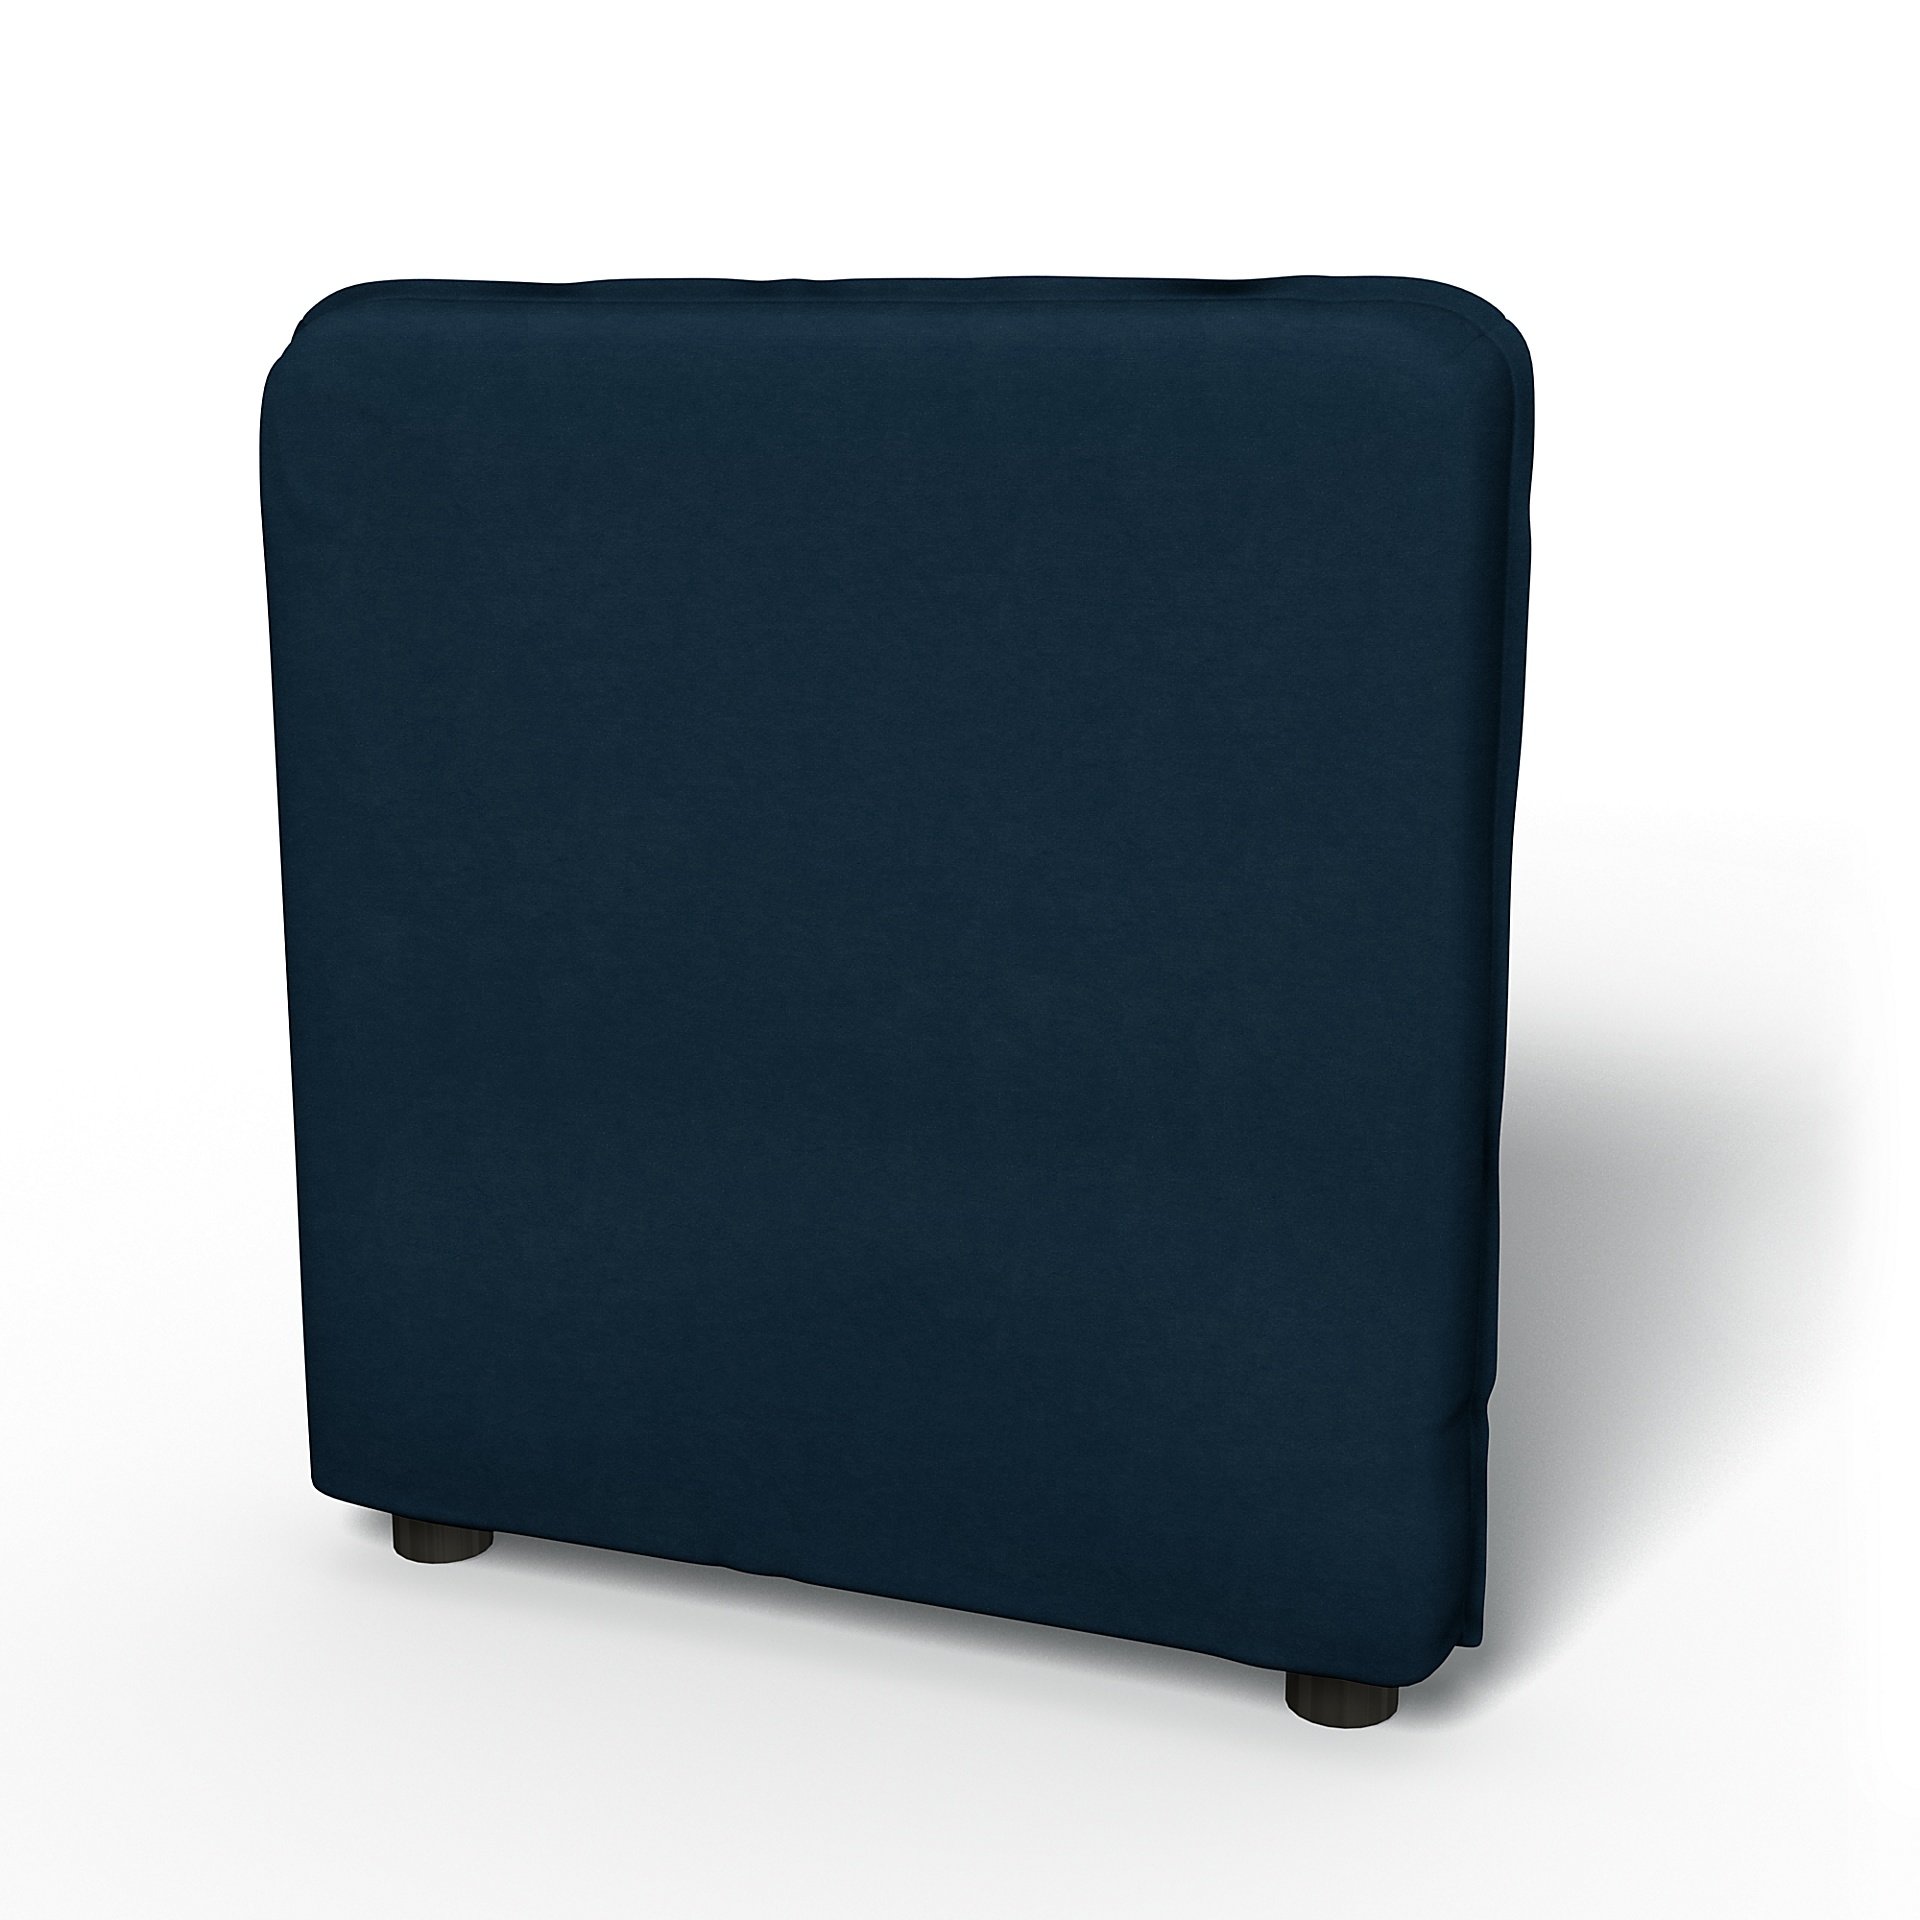 IKEA - Vallentuna Armrest Cover (80x60x13cm), Midnight, Velvet - Bemz